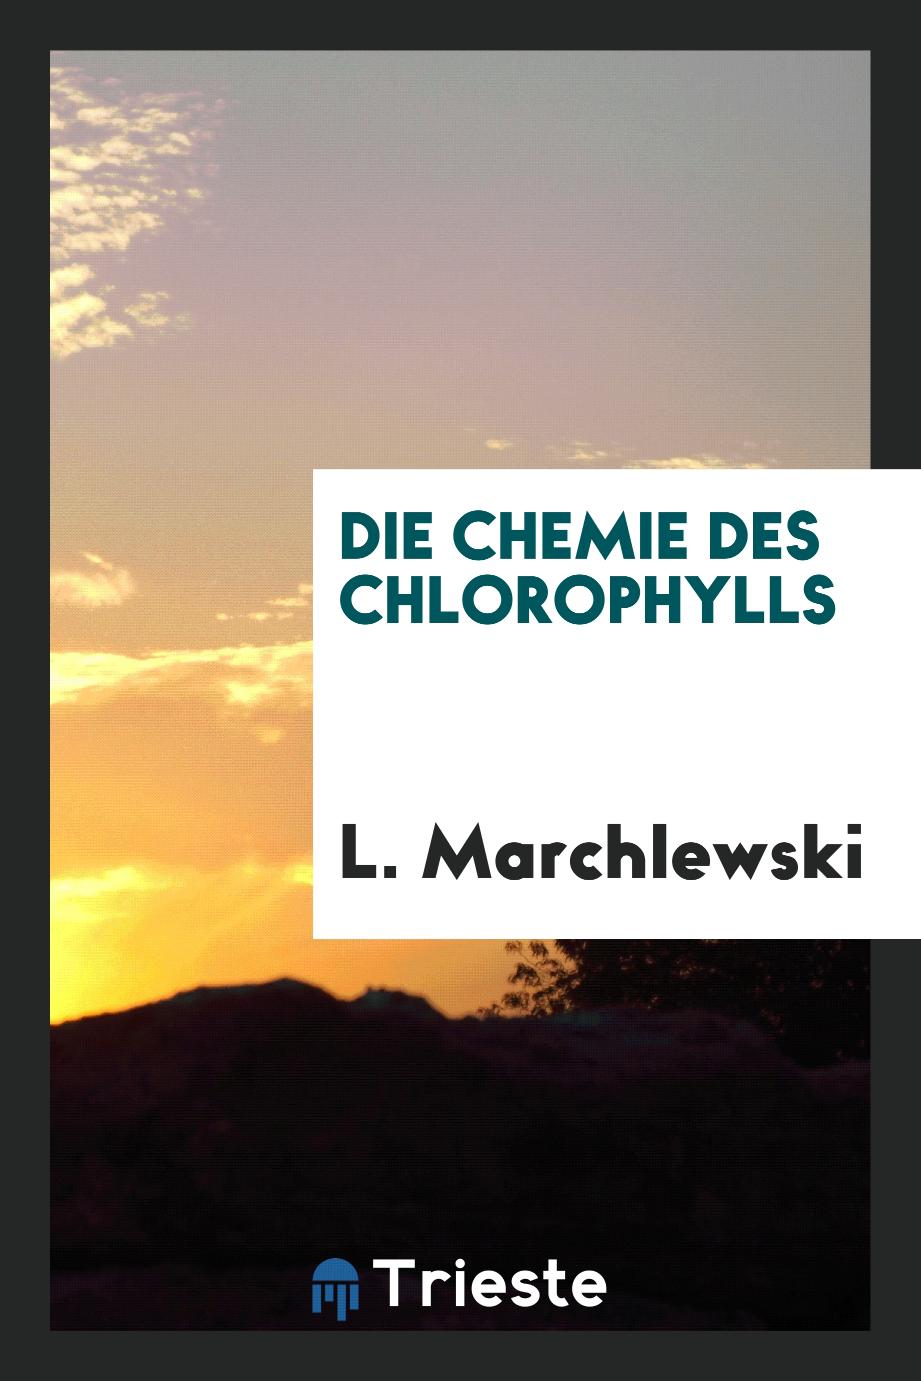 L. Marchlewski - Die chemie des chlorophylls